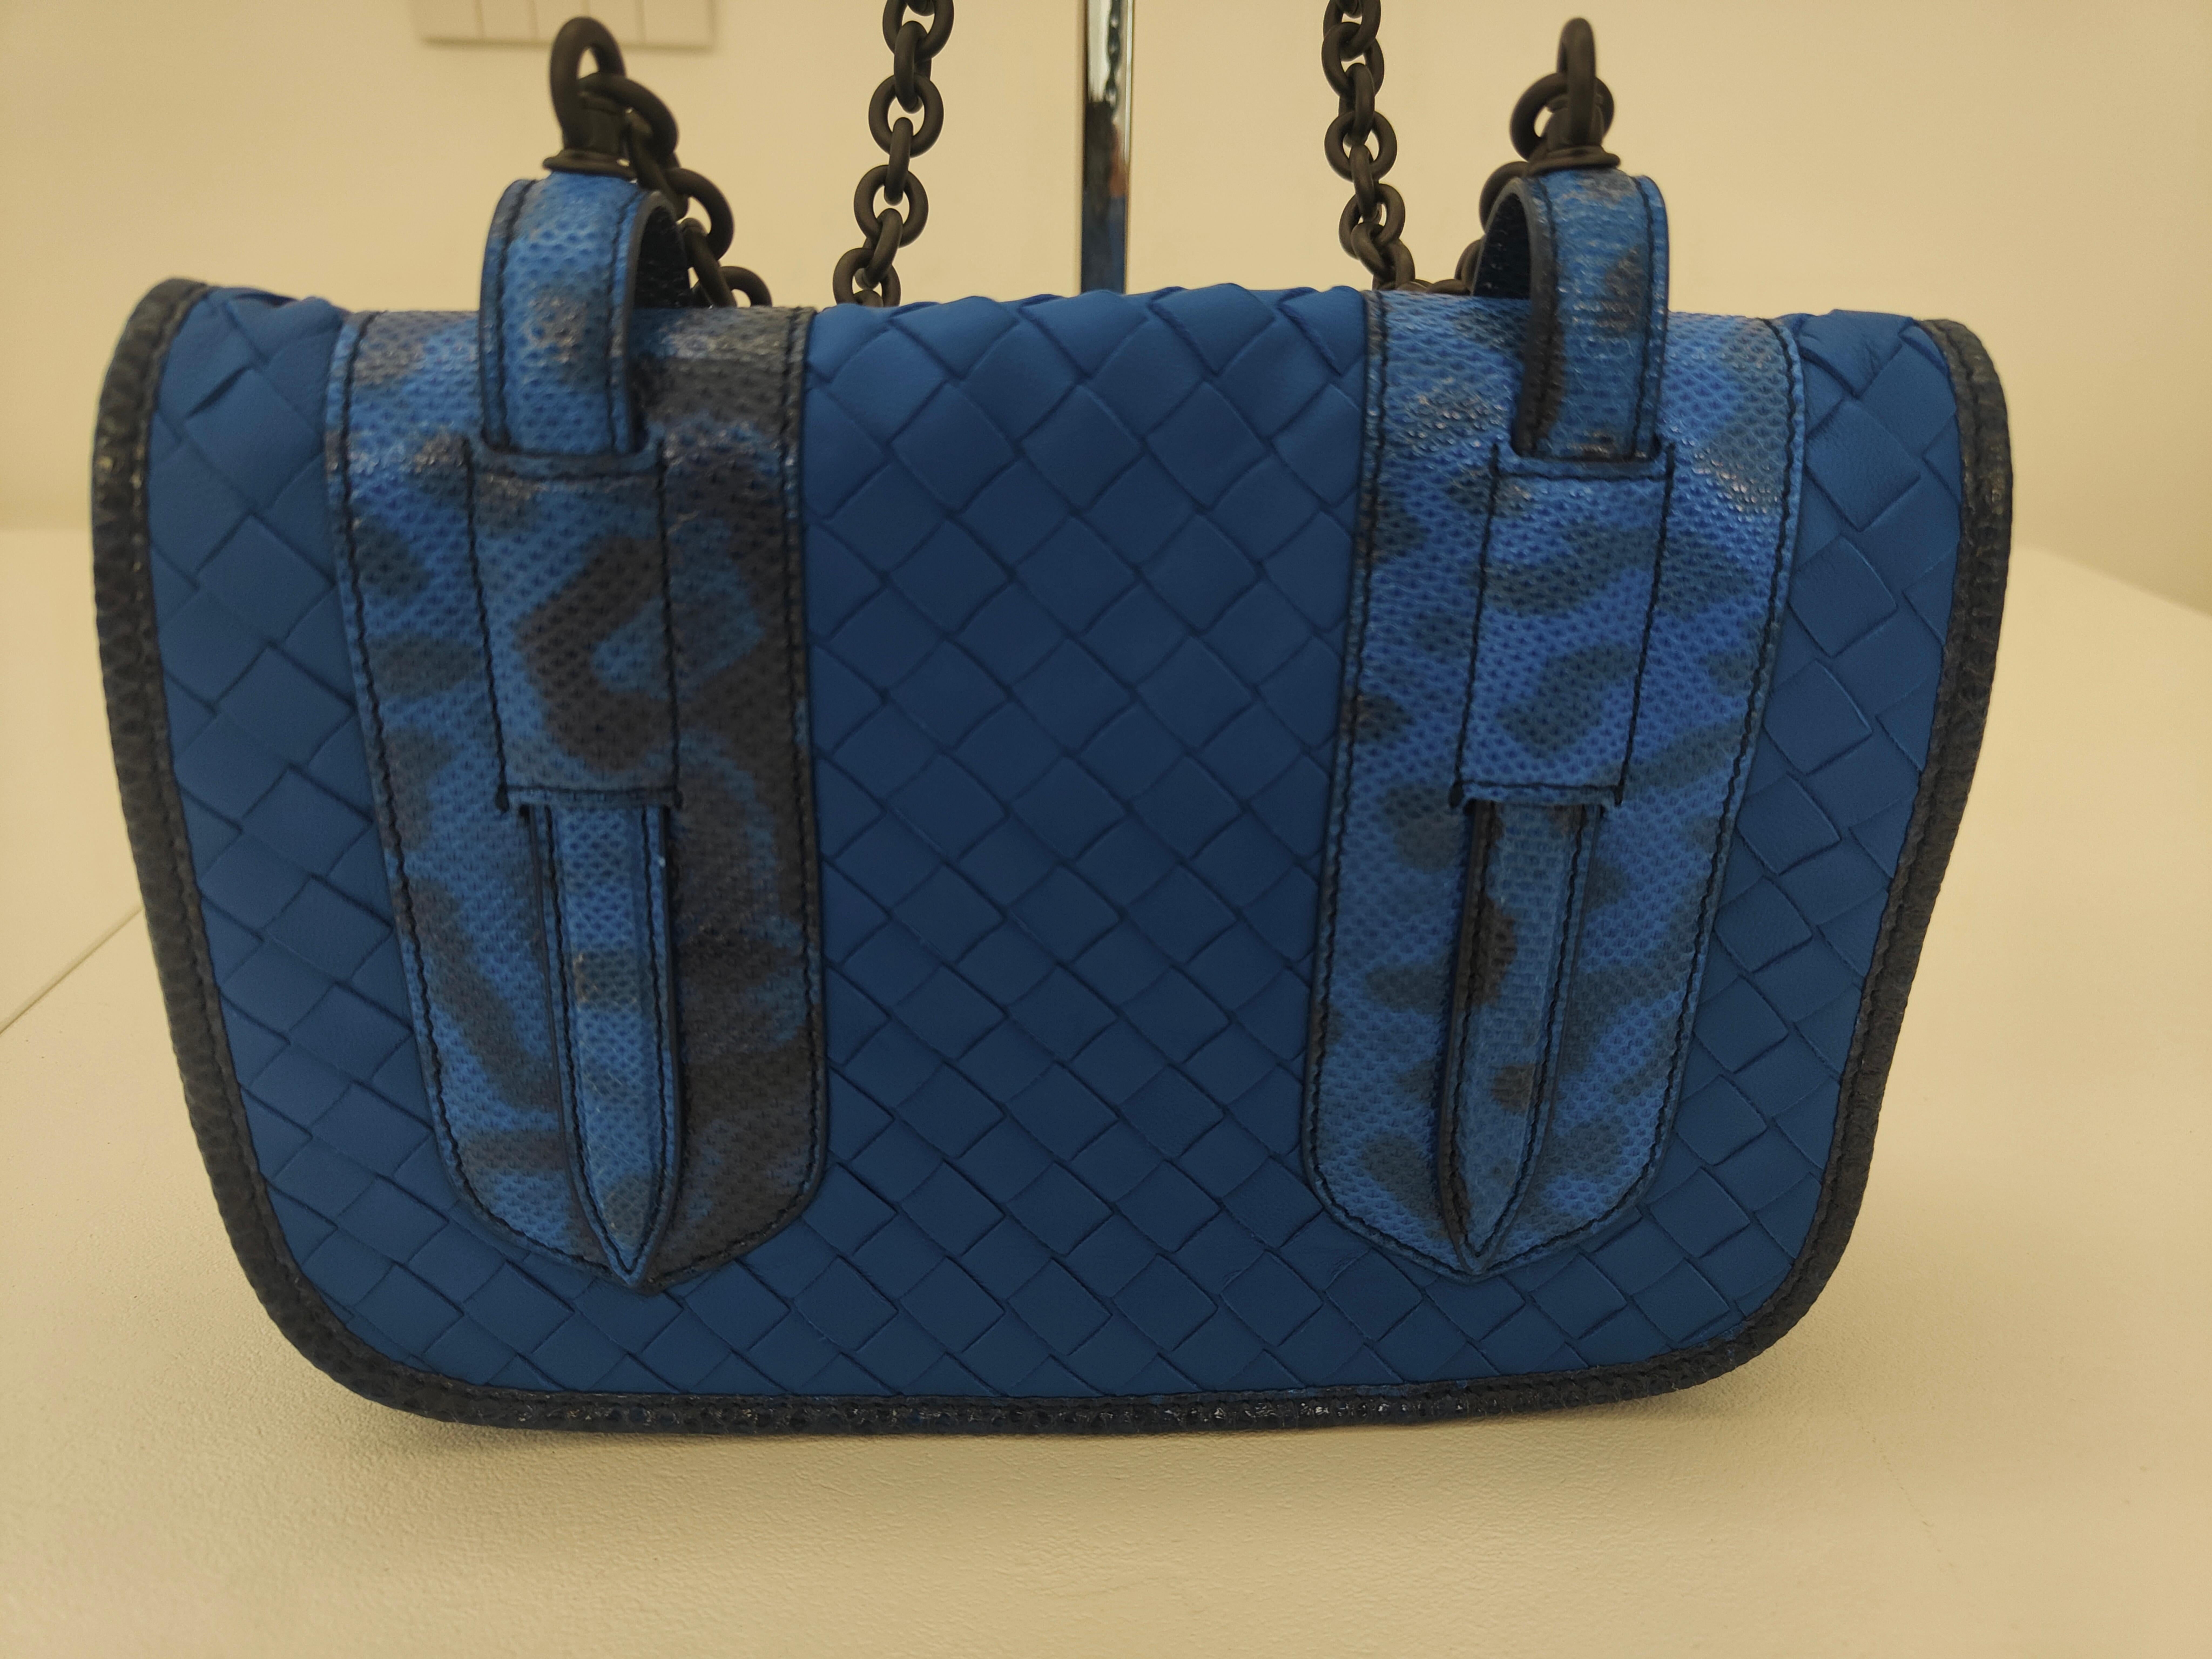 Bottega Veneta blue leather shoulder bag
measurements: 22*16 cm